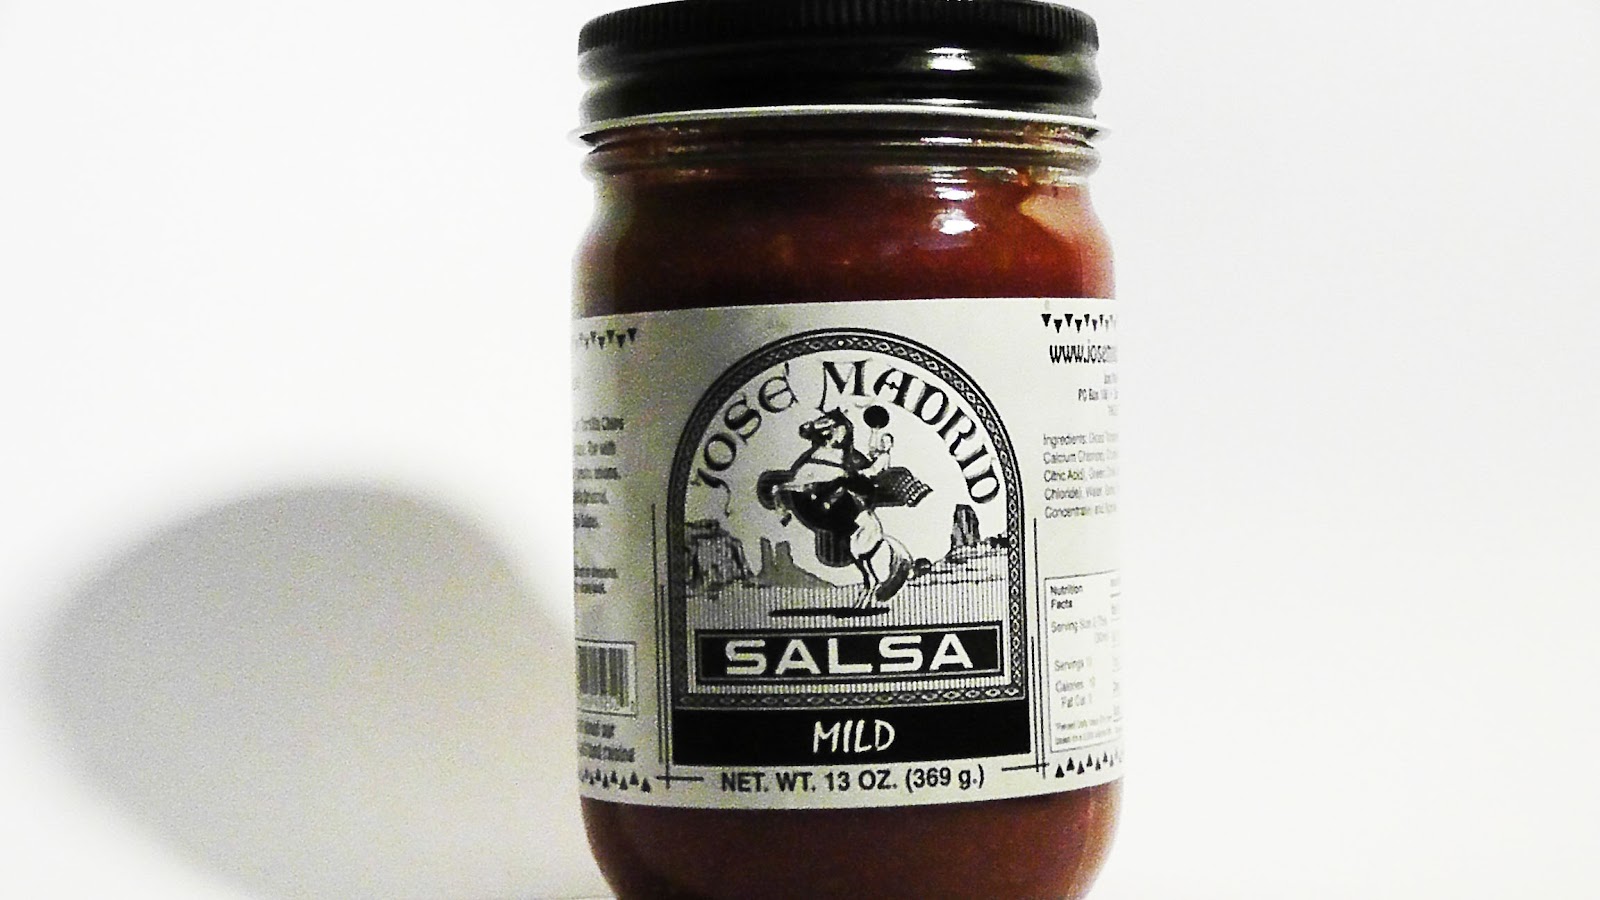 Jar of Jose Madrid mild salsa 13 ounce black and white label